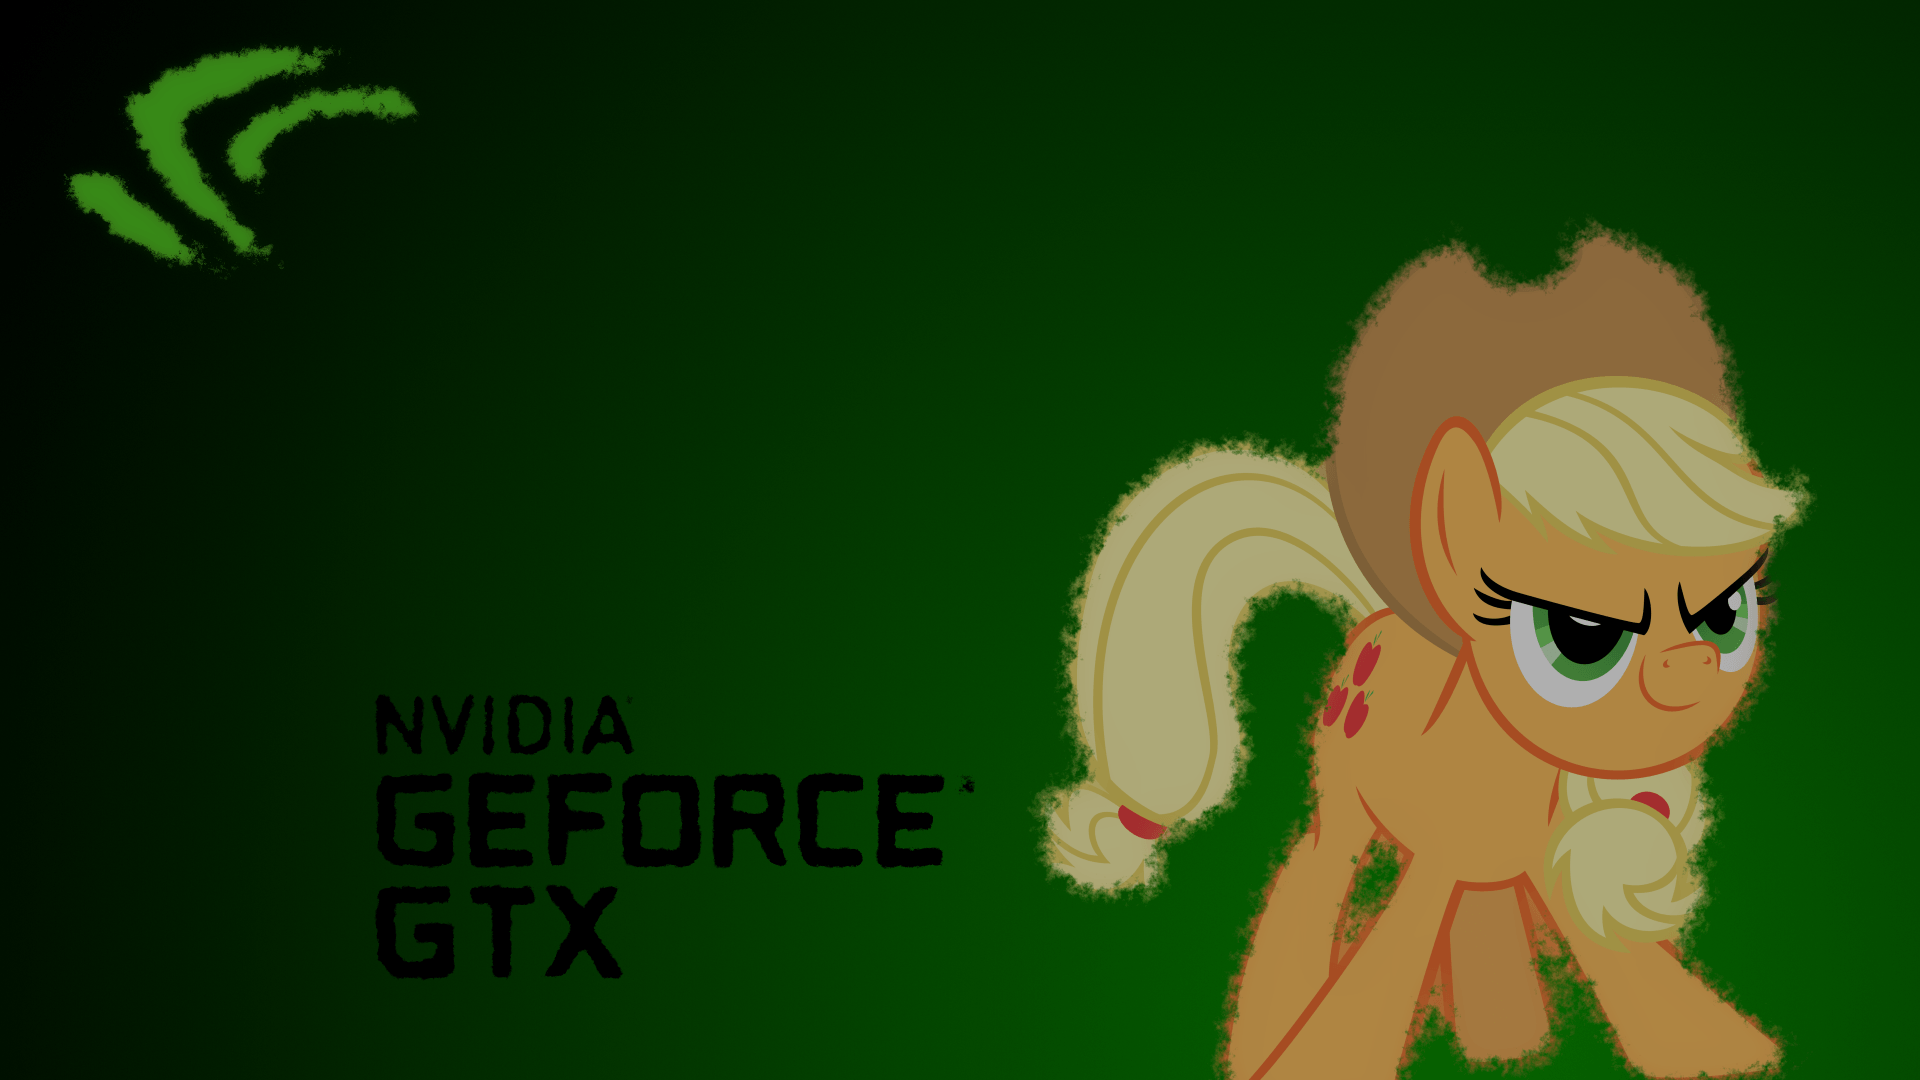 NVidia GeForce GTX 'Applejack' Wallpaper